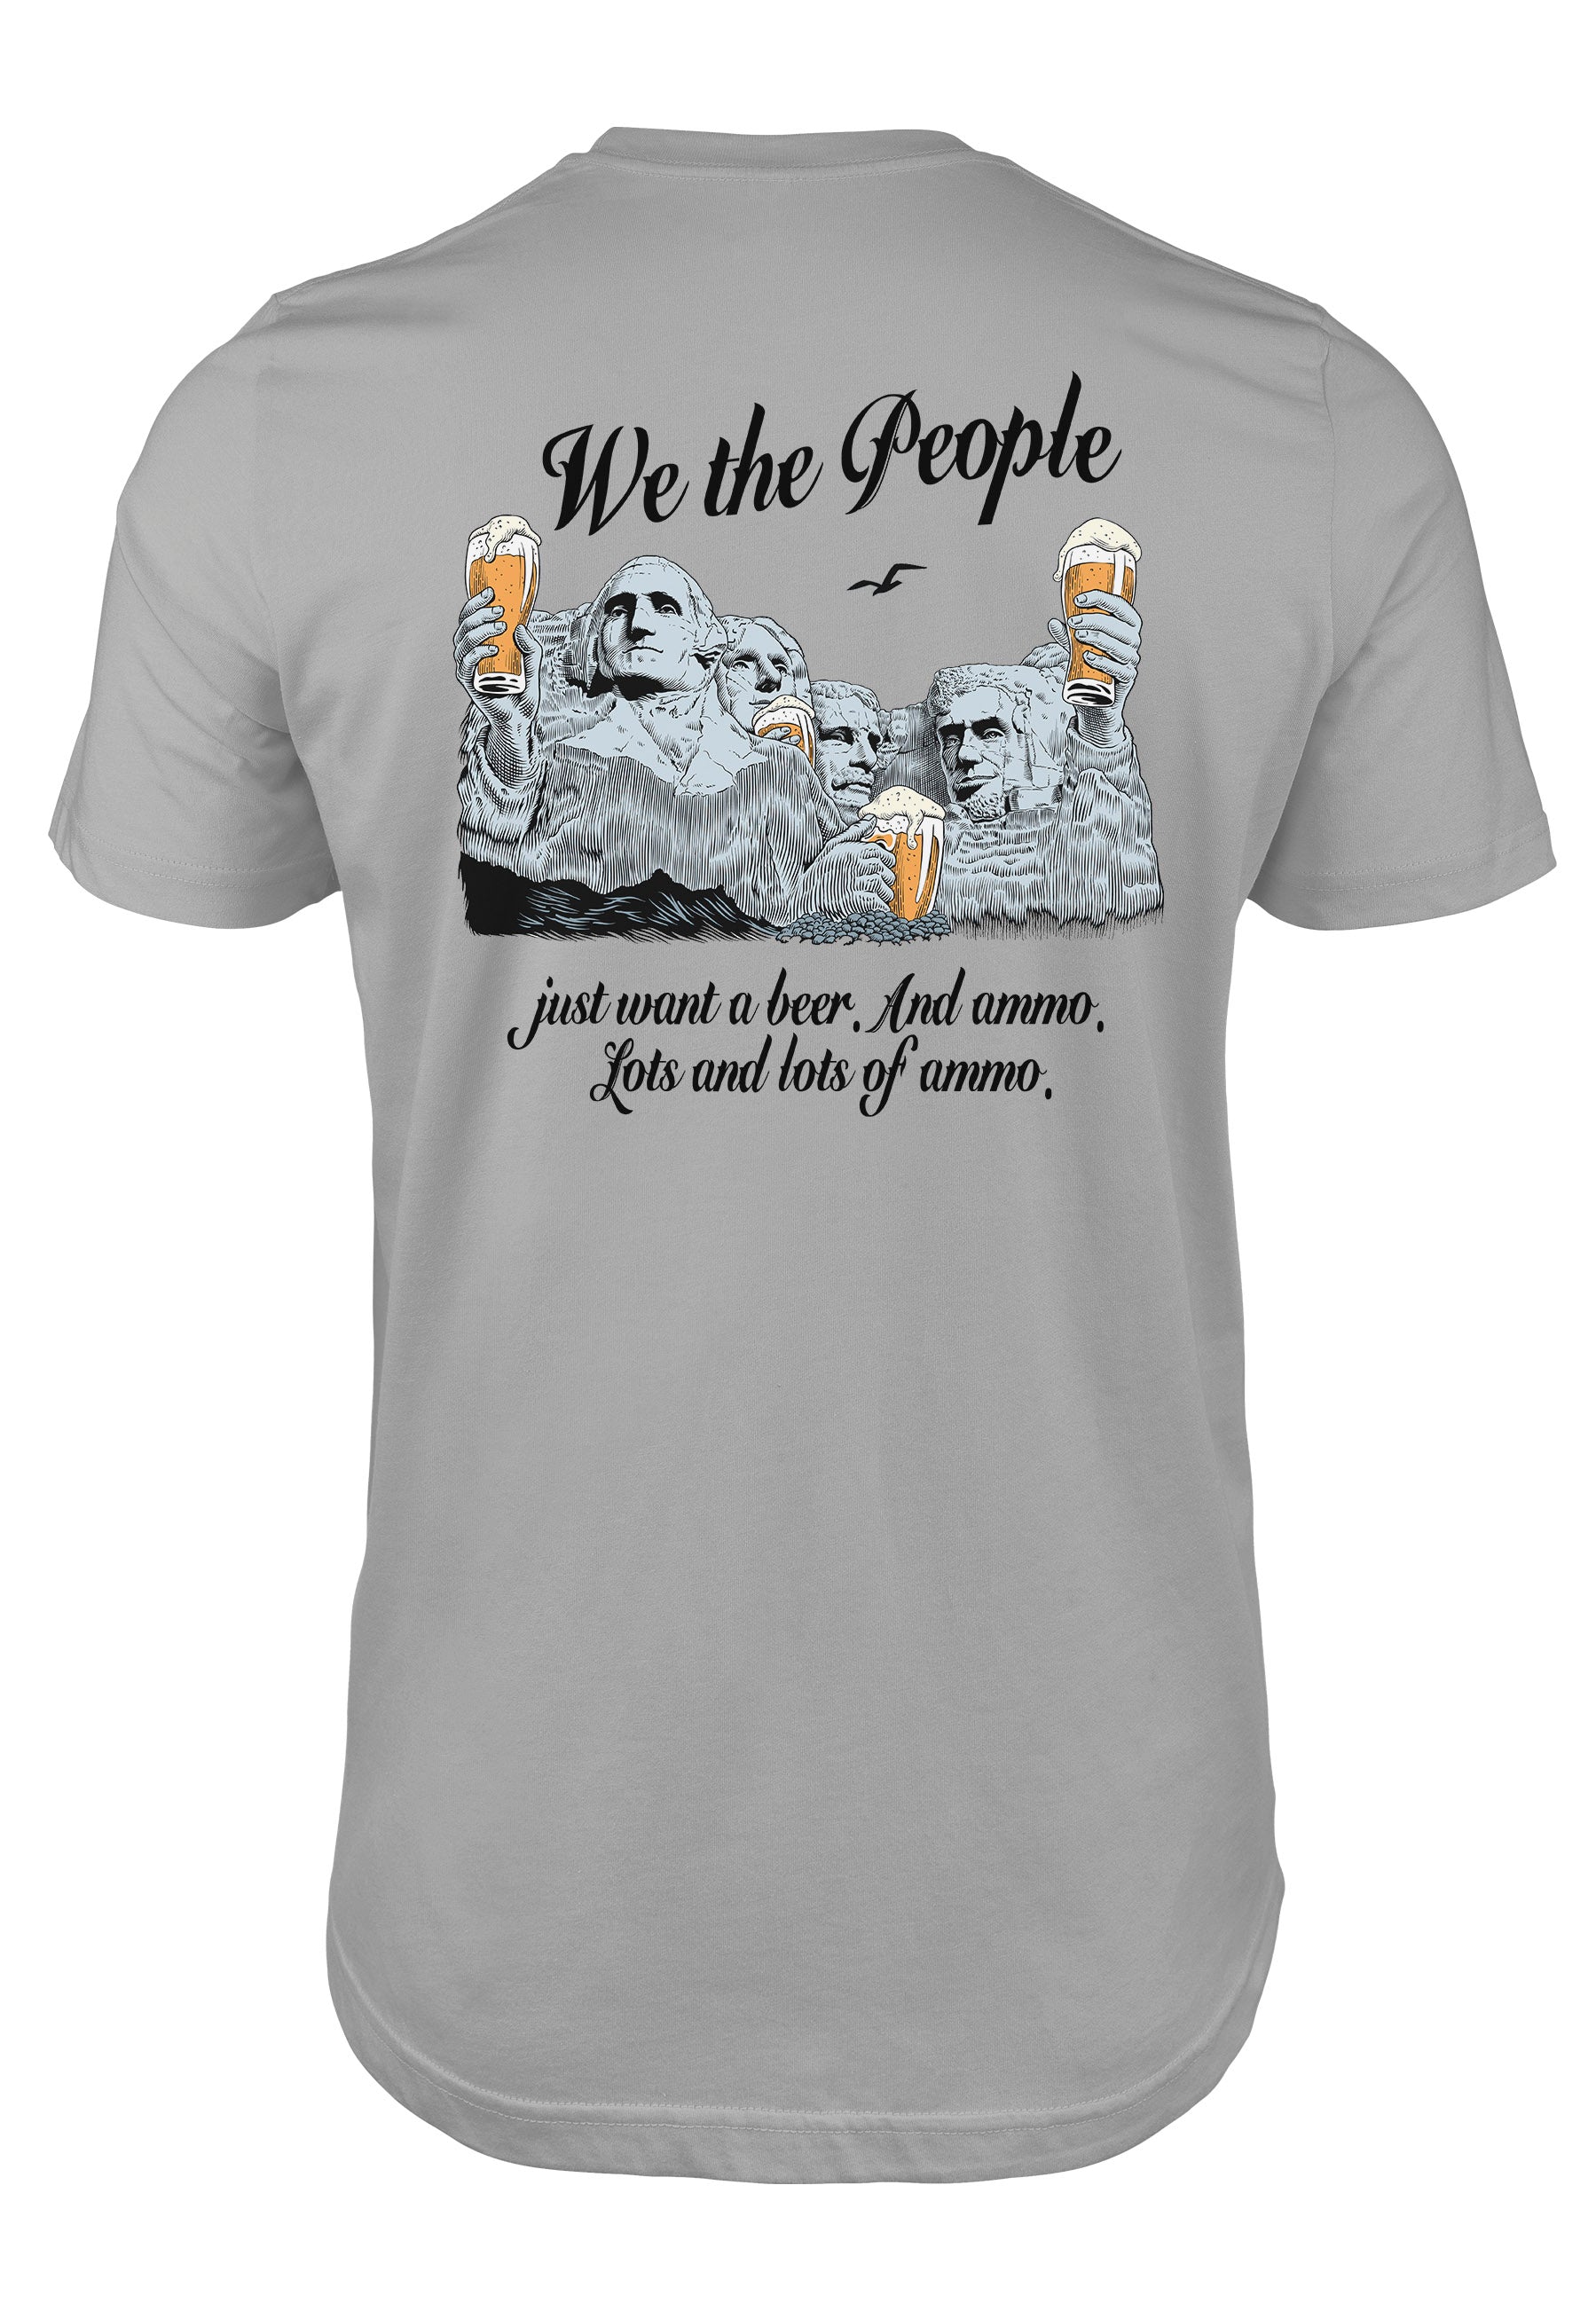 Mt Rushmore patriot t-shirt design on back of tee shirt